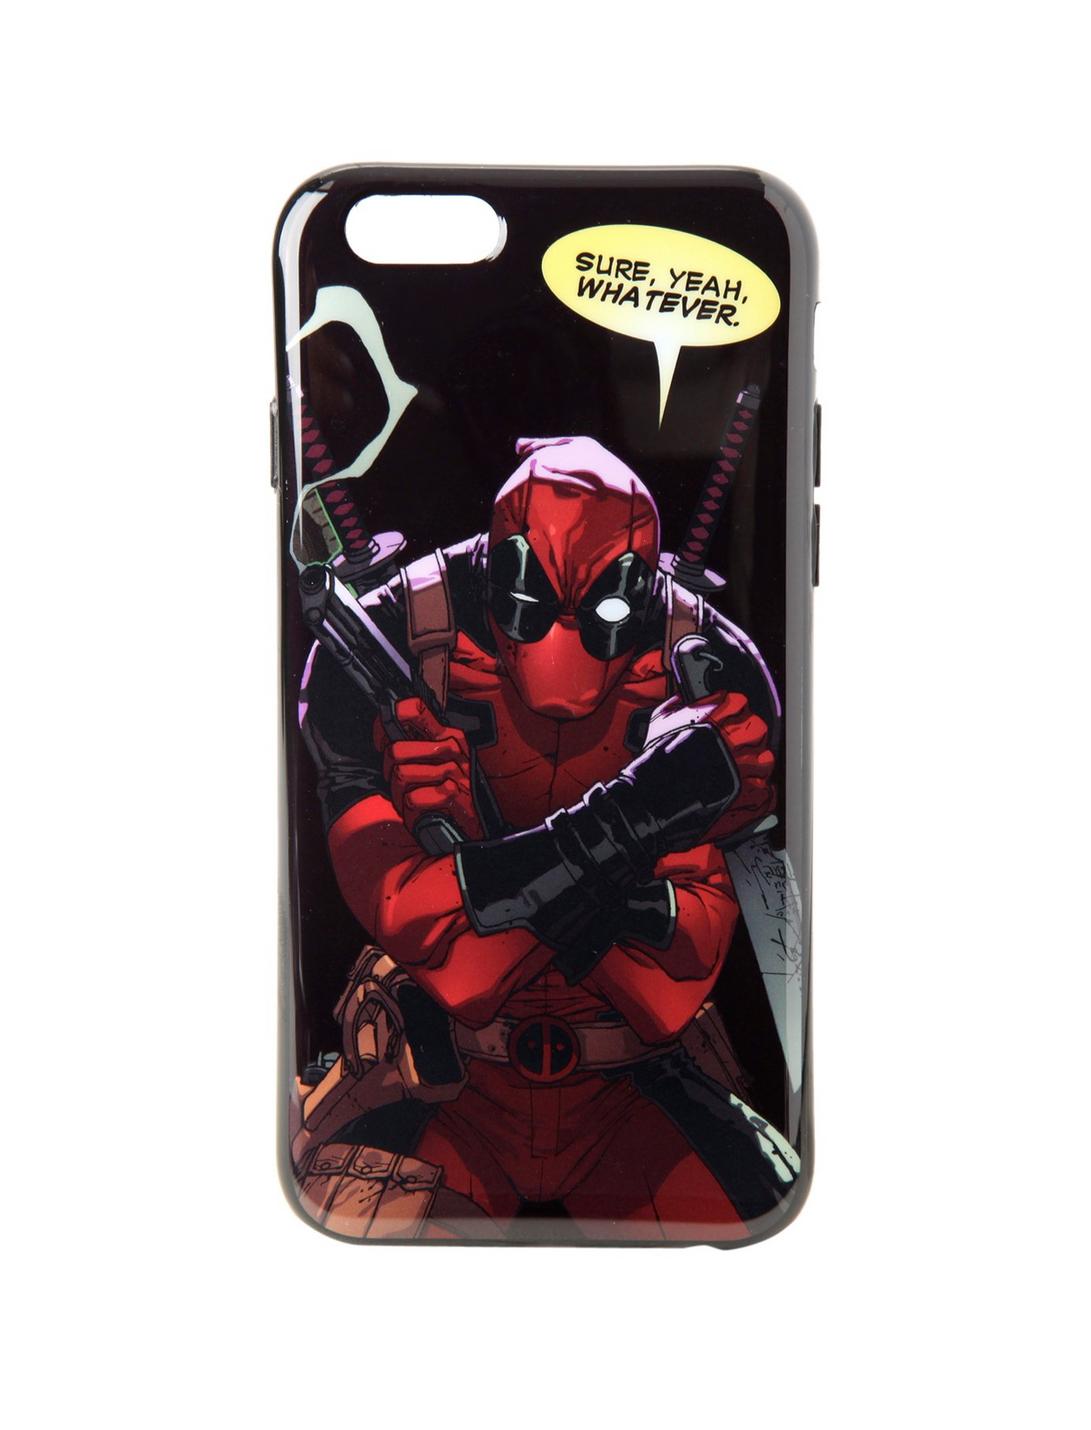 Marvel Deadpool Sure Yeah Whatever iPhone 6/6s Case, , hi-res